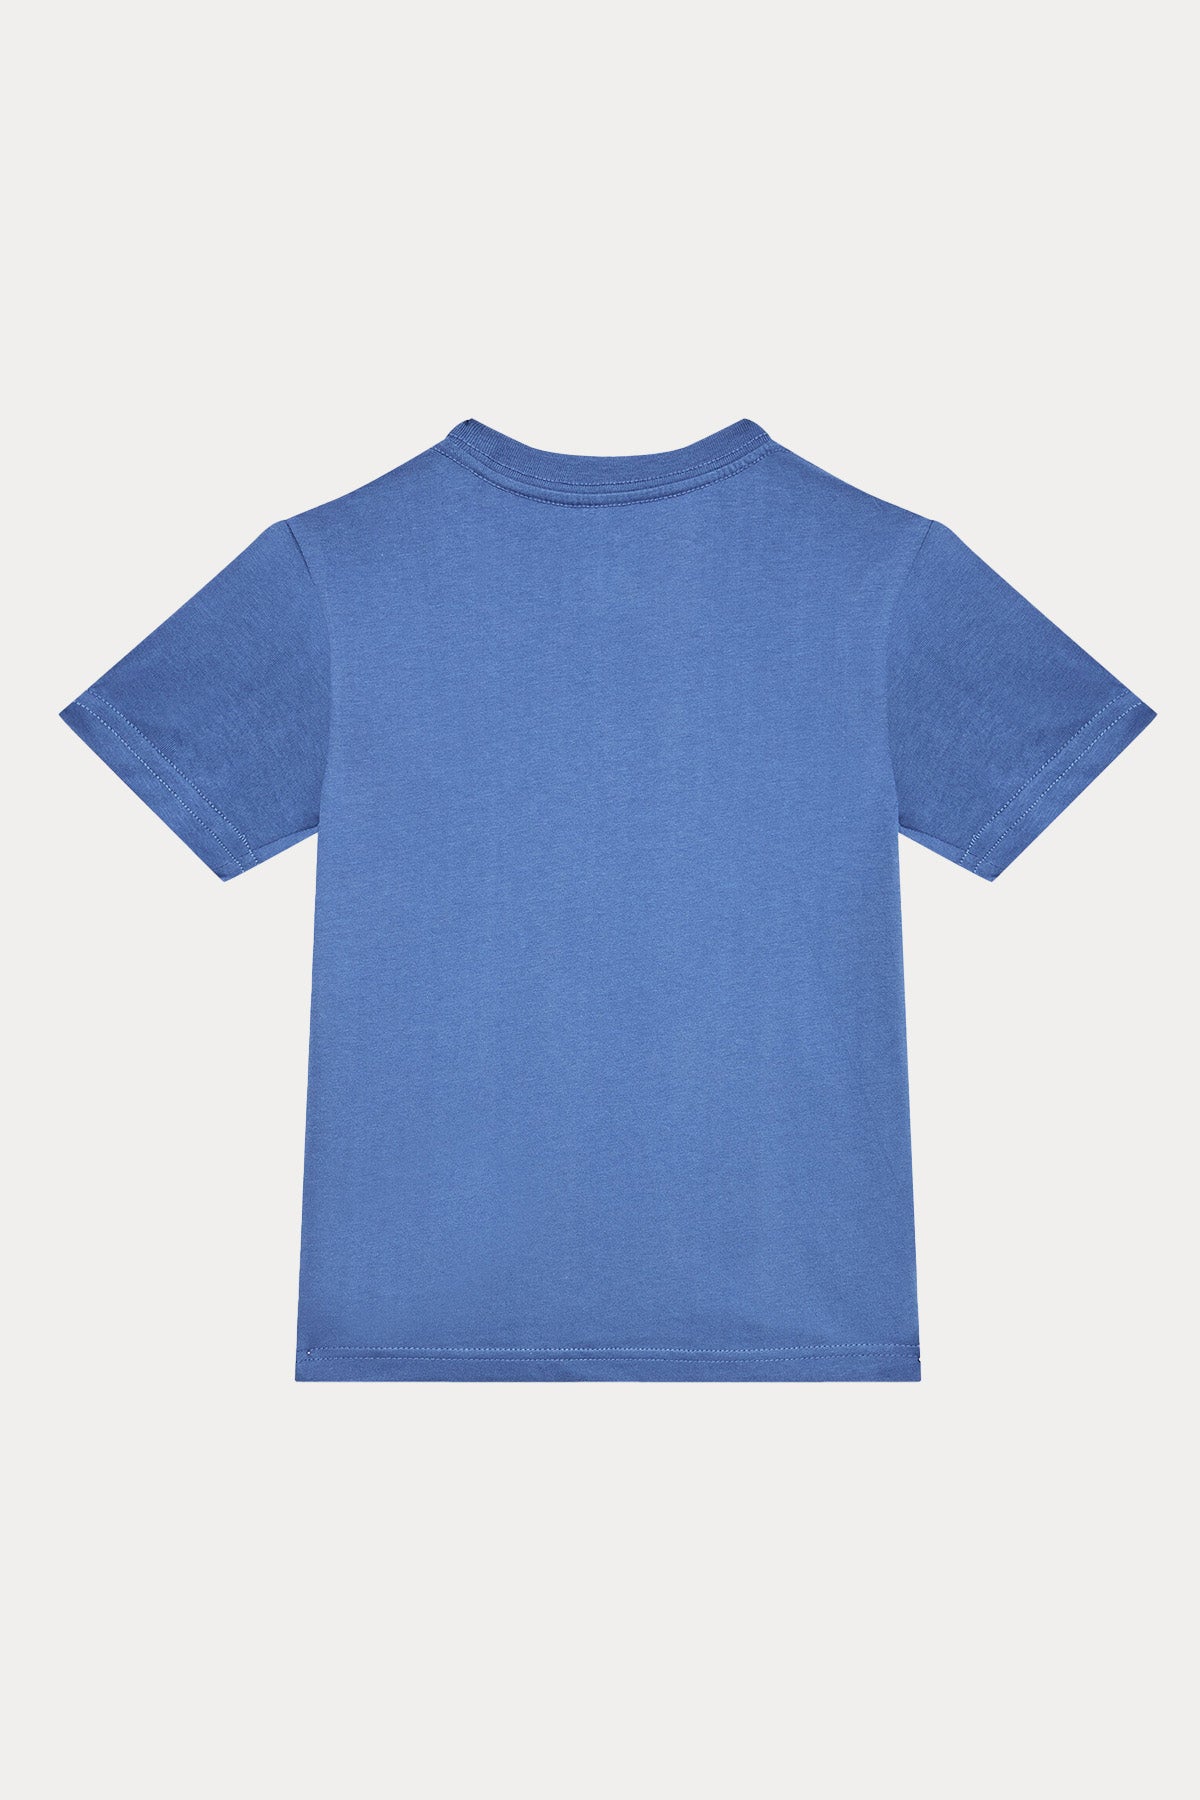 Polo Ralph Lauren Kids S-L Beden Unisex Çocuk Yuvarlak Yaka T-shirt